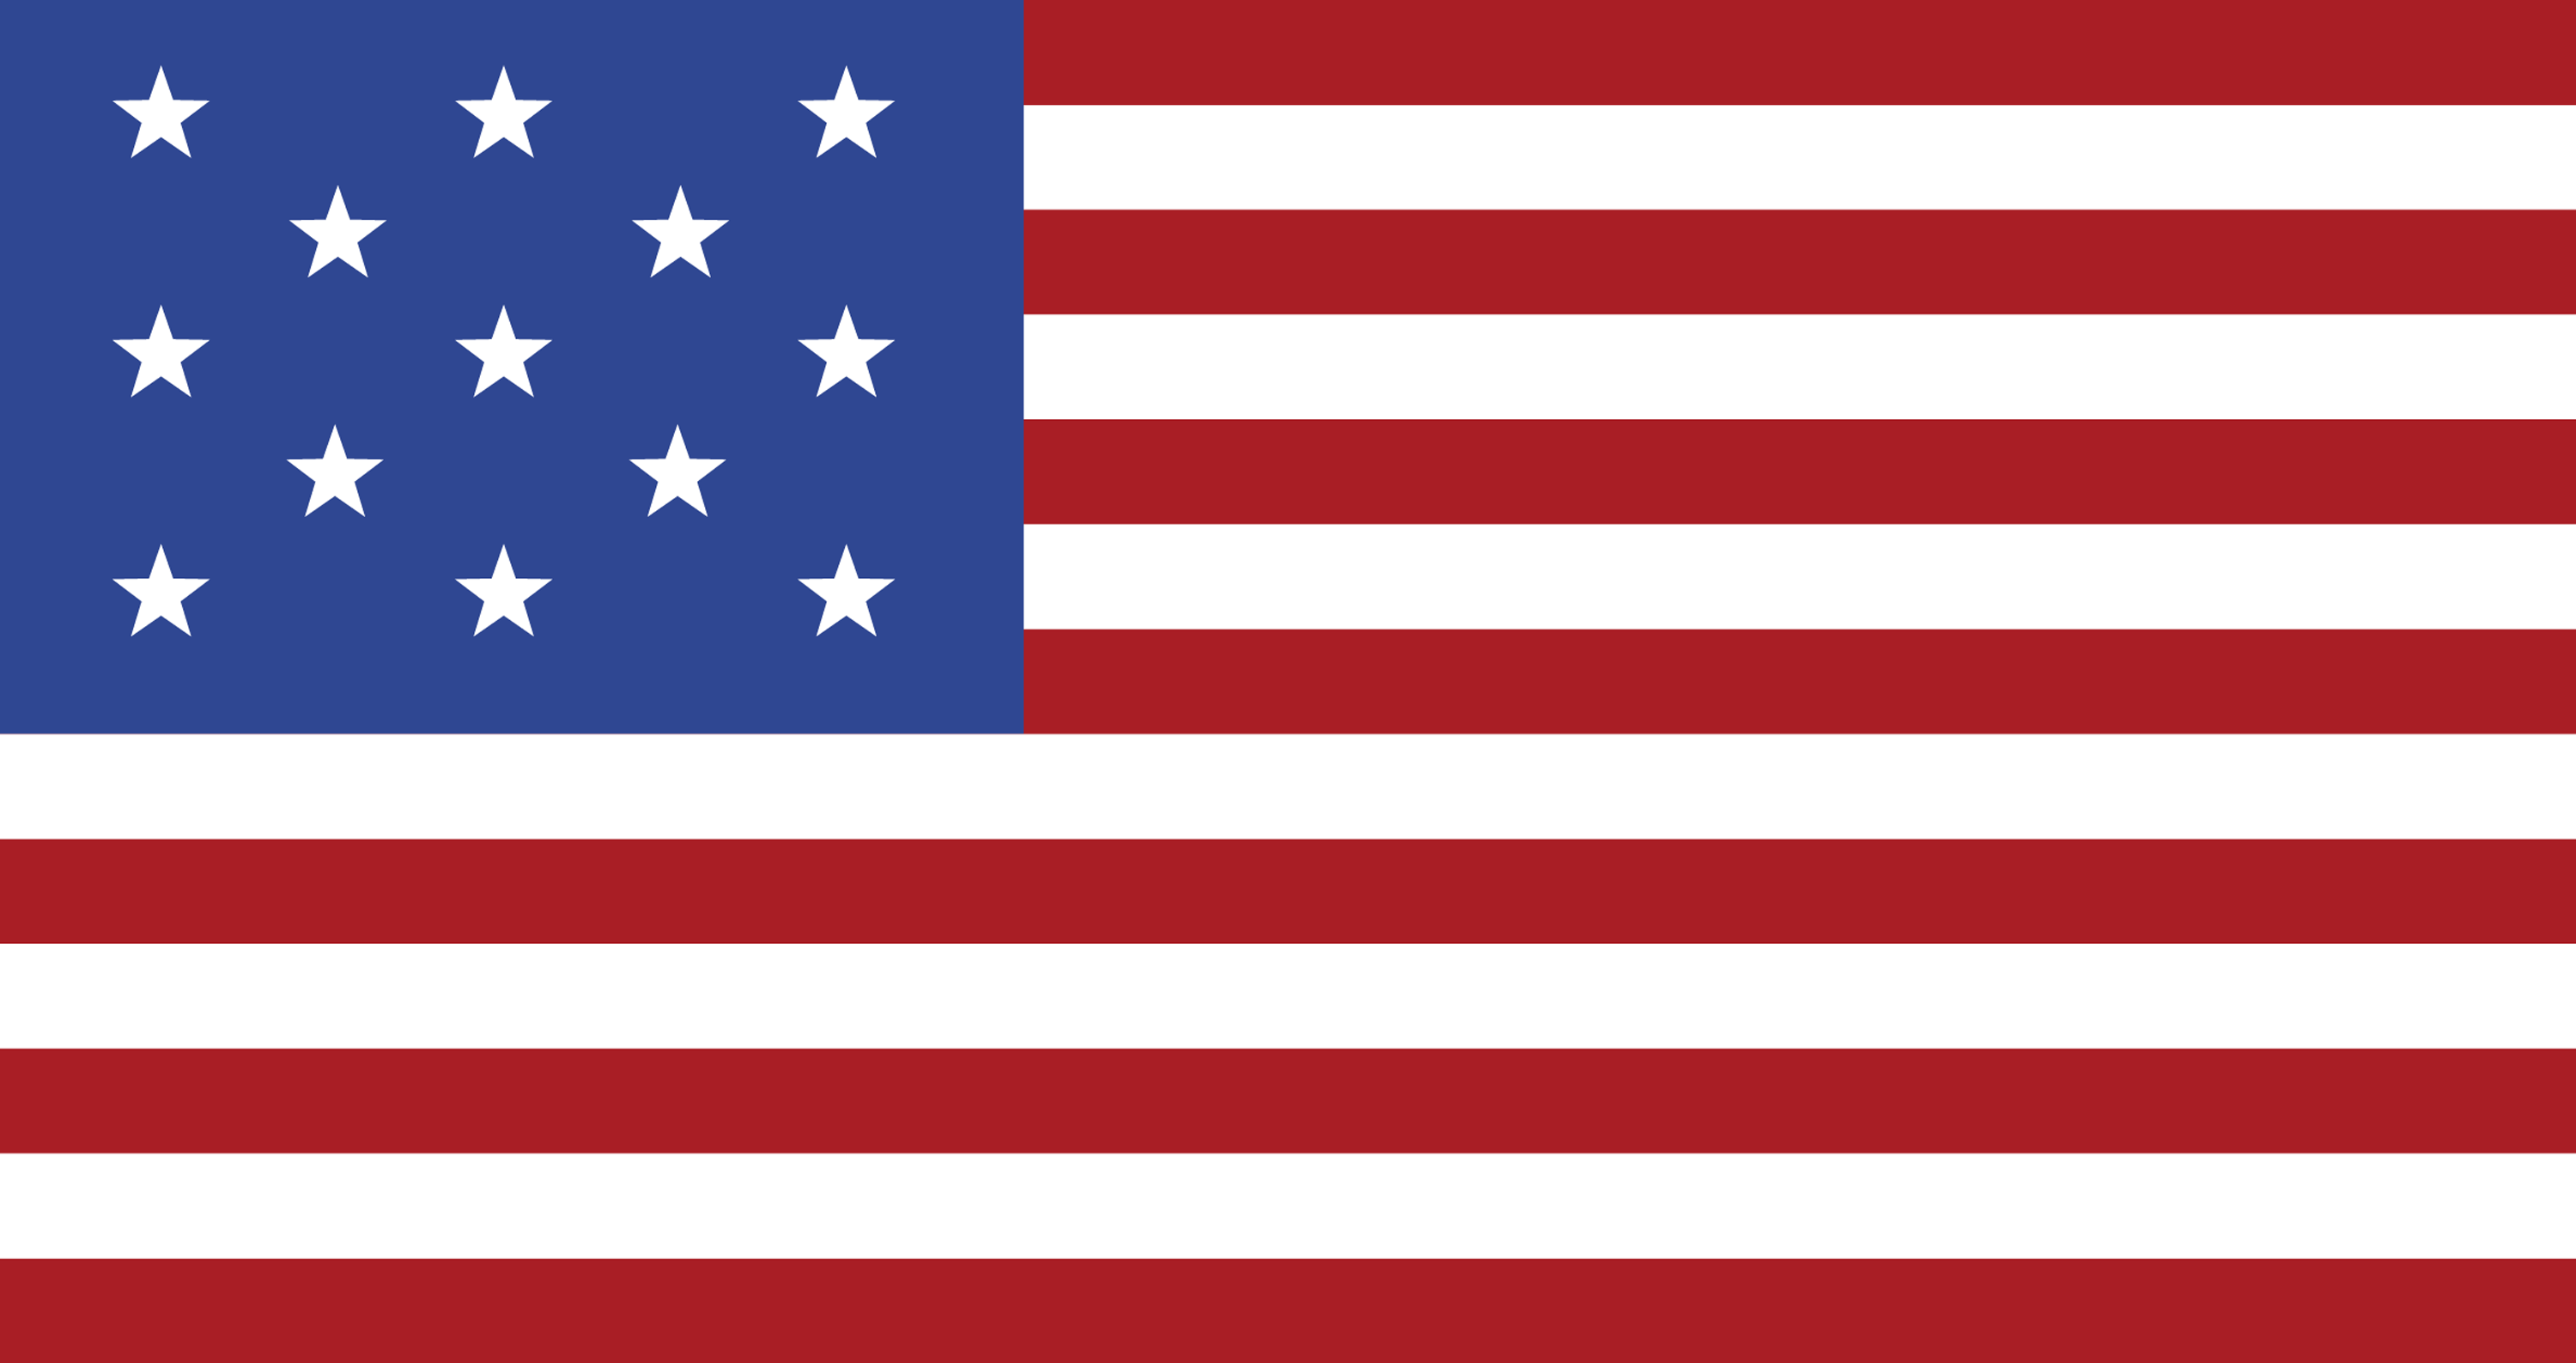 13 Star United States Flag, 1776 | ClipArt ETC